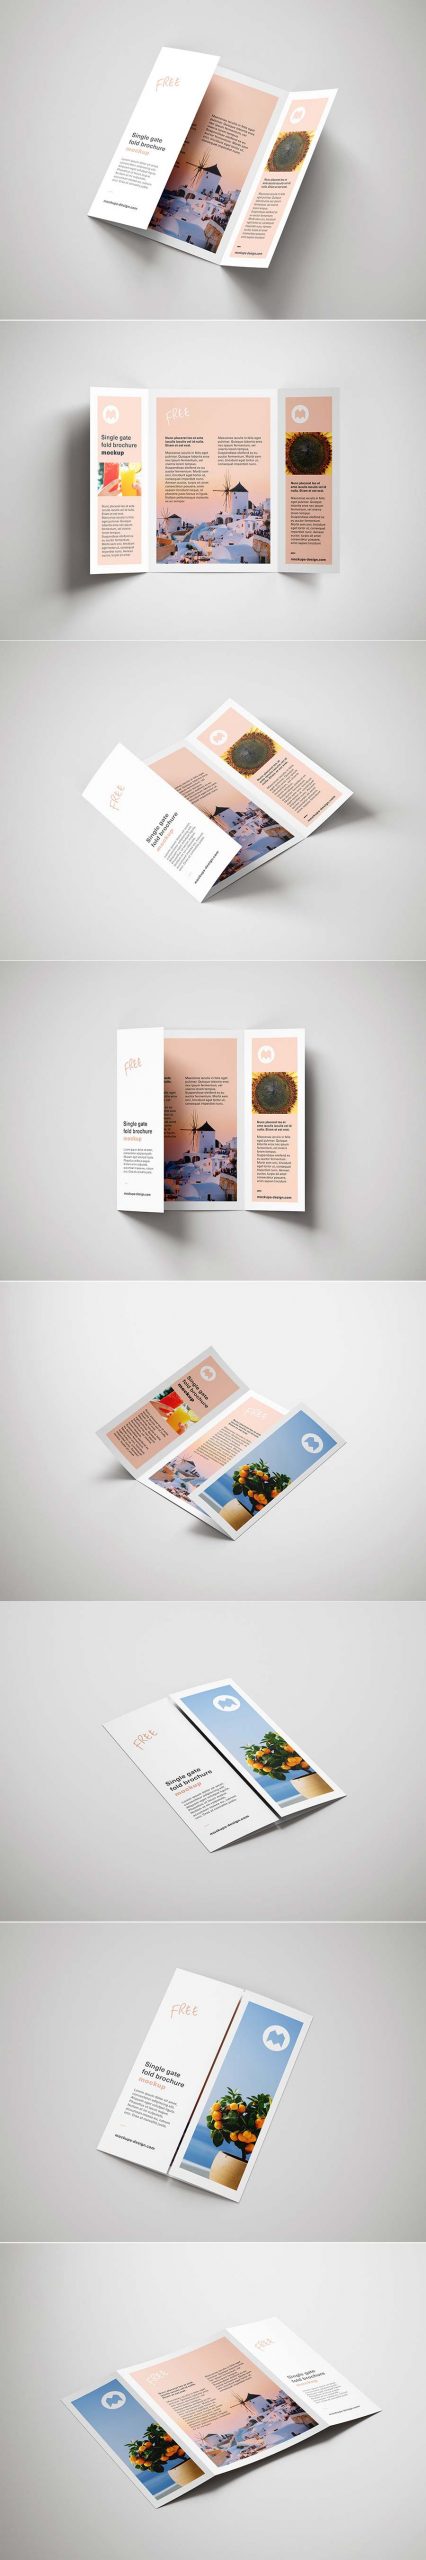 Single Gate Fold Brochure Mockup Free Download